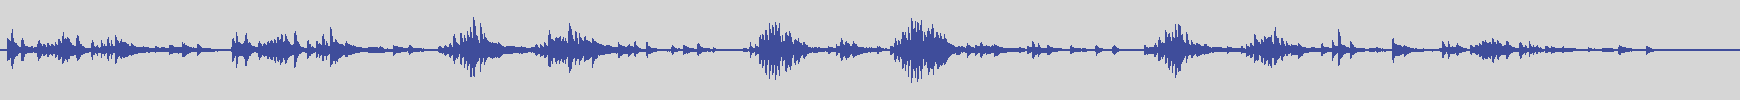 big_music_classic [BMC005] Erik Satie, Corrado Rossi - Gnossienne N.2 [] audio wave form